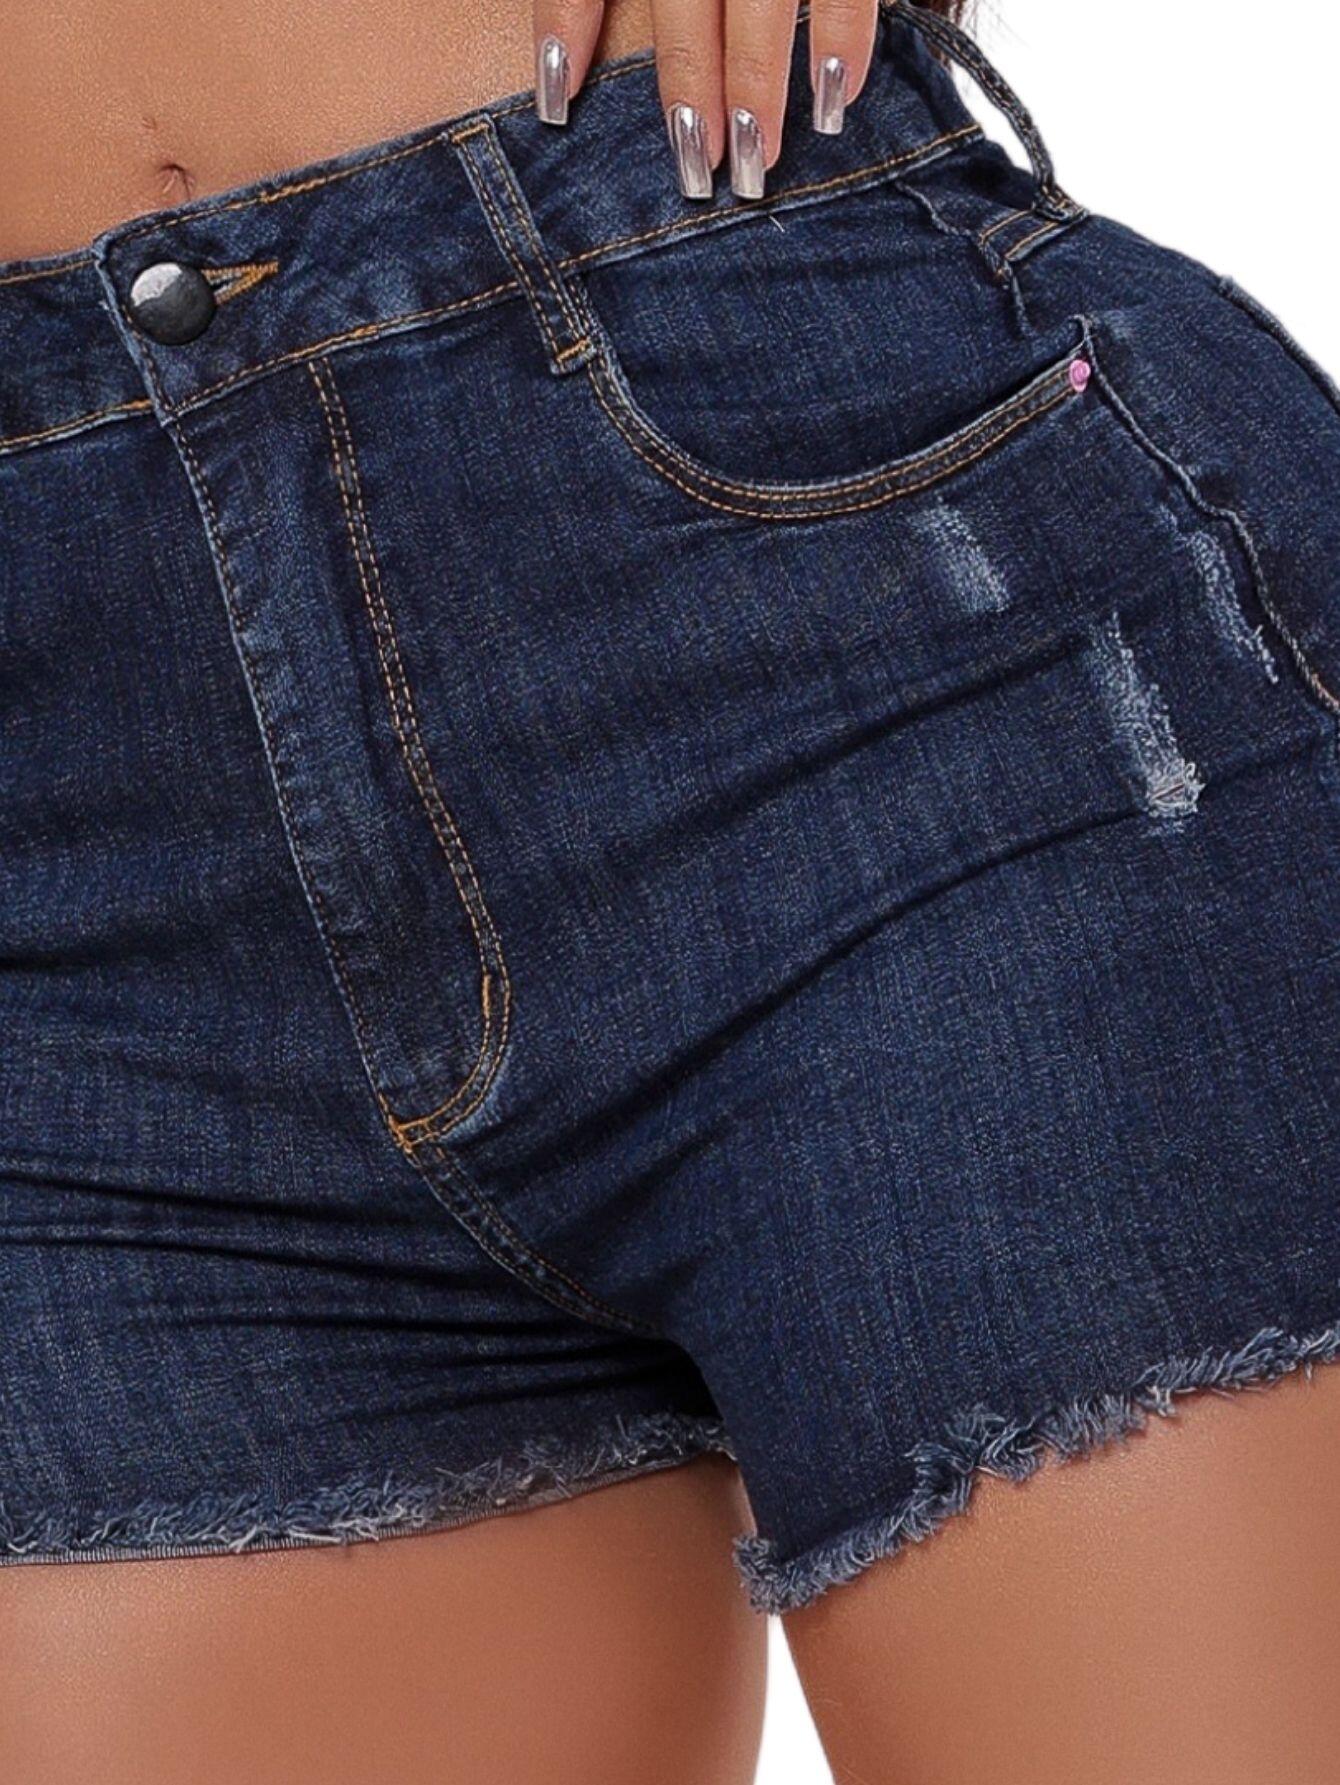 Short Jeans Feminino Cintura Alta Barra Desfiado